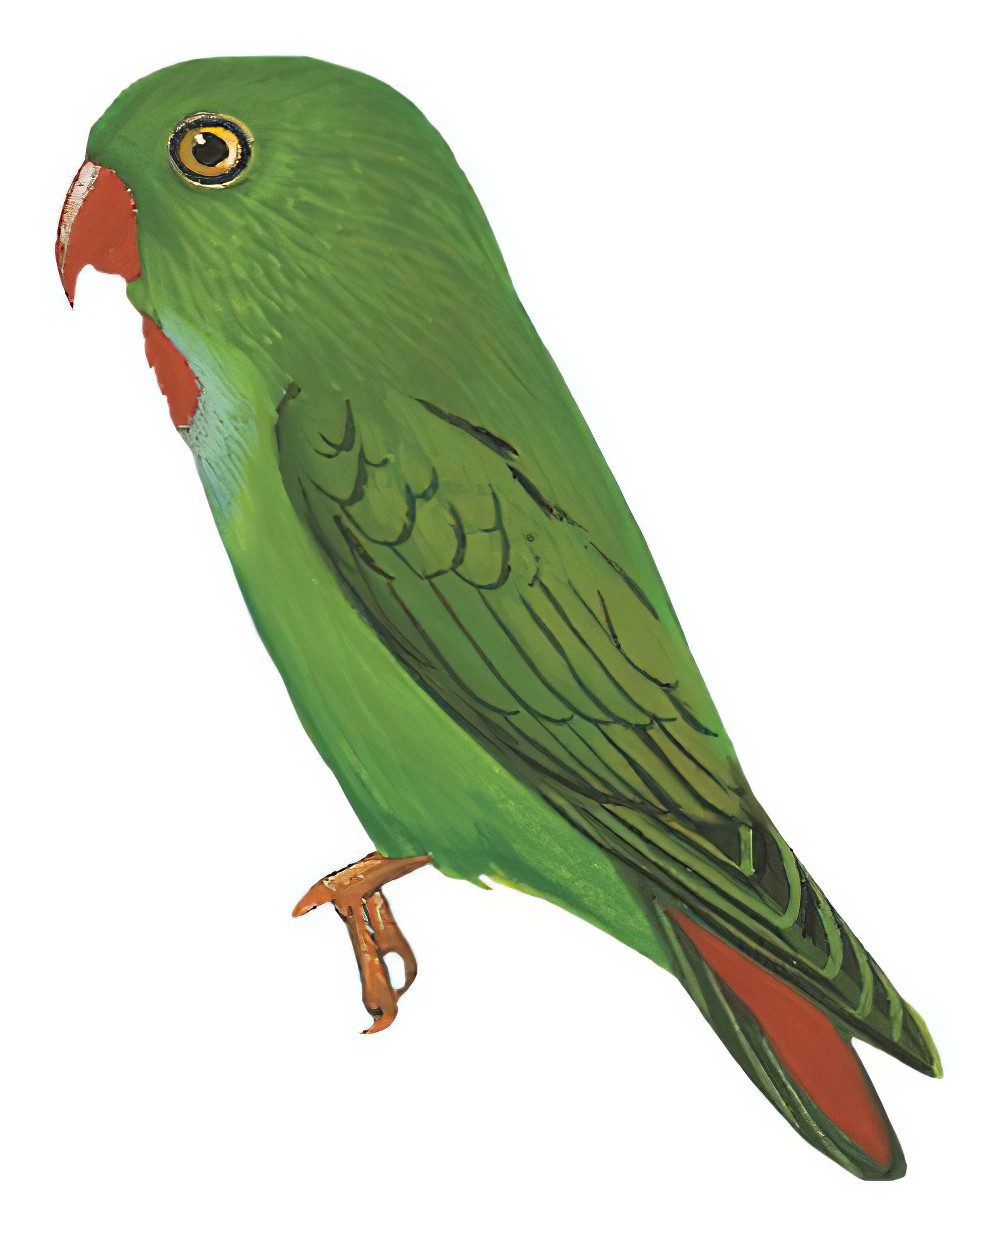 Pygmy Hanging-Parrot / Loriculus exilis